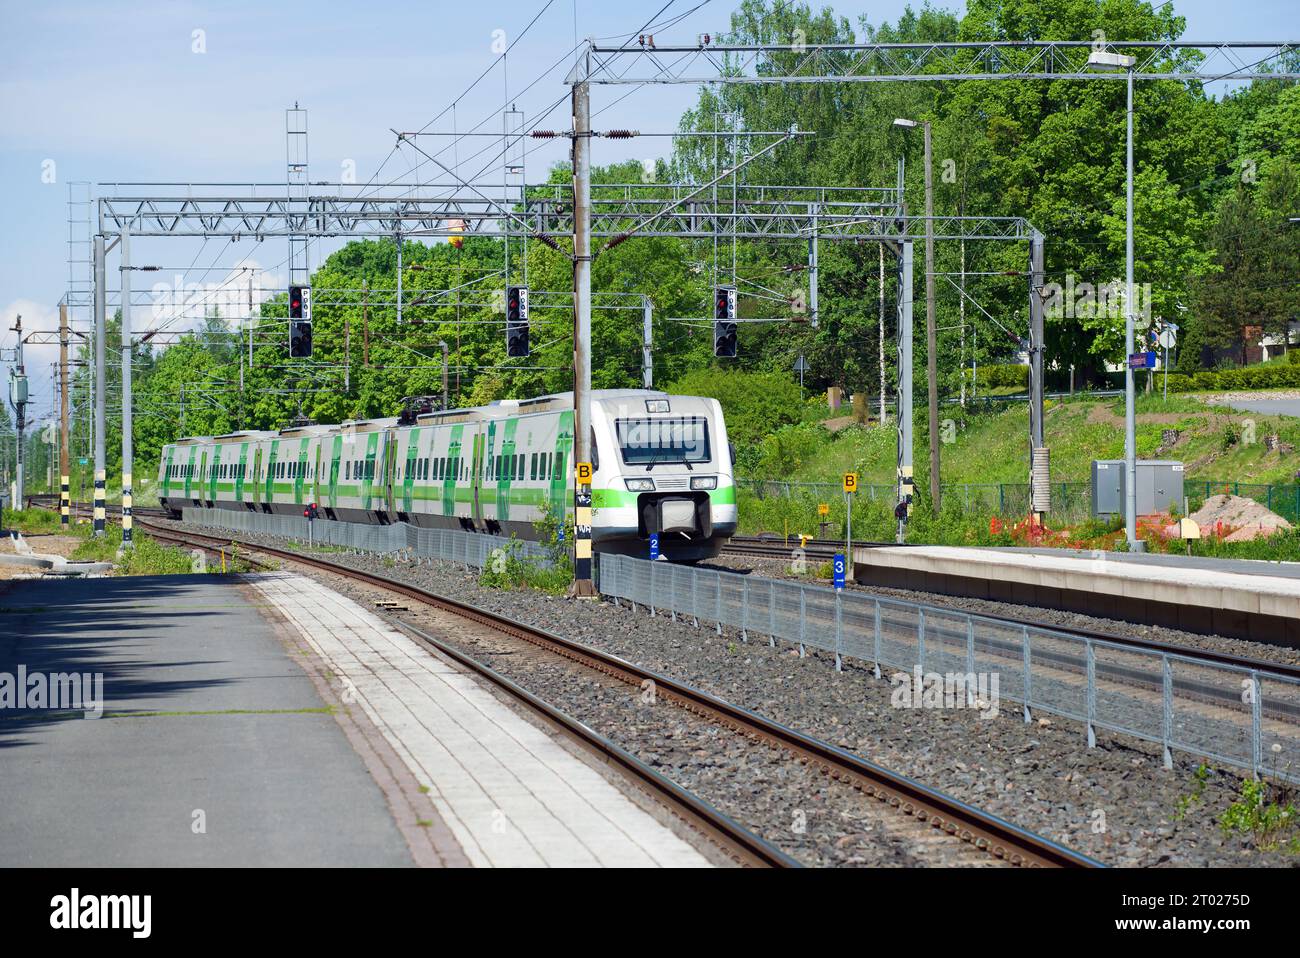 HAMEENLINNA, FINLAND - JUNE 10, 2017: Sm3 'Pendolino' high-speed train at the Hameenlinna railway station on a sunny summer day Stock Photo